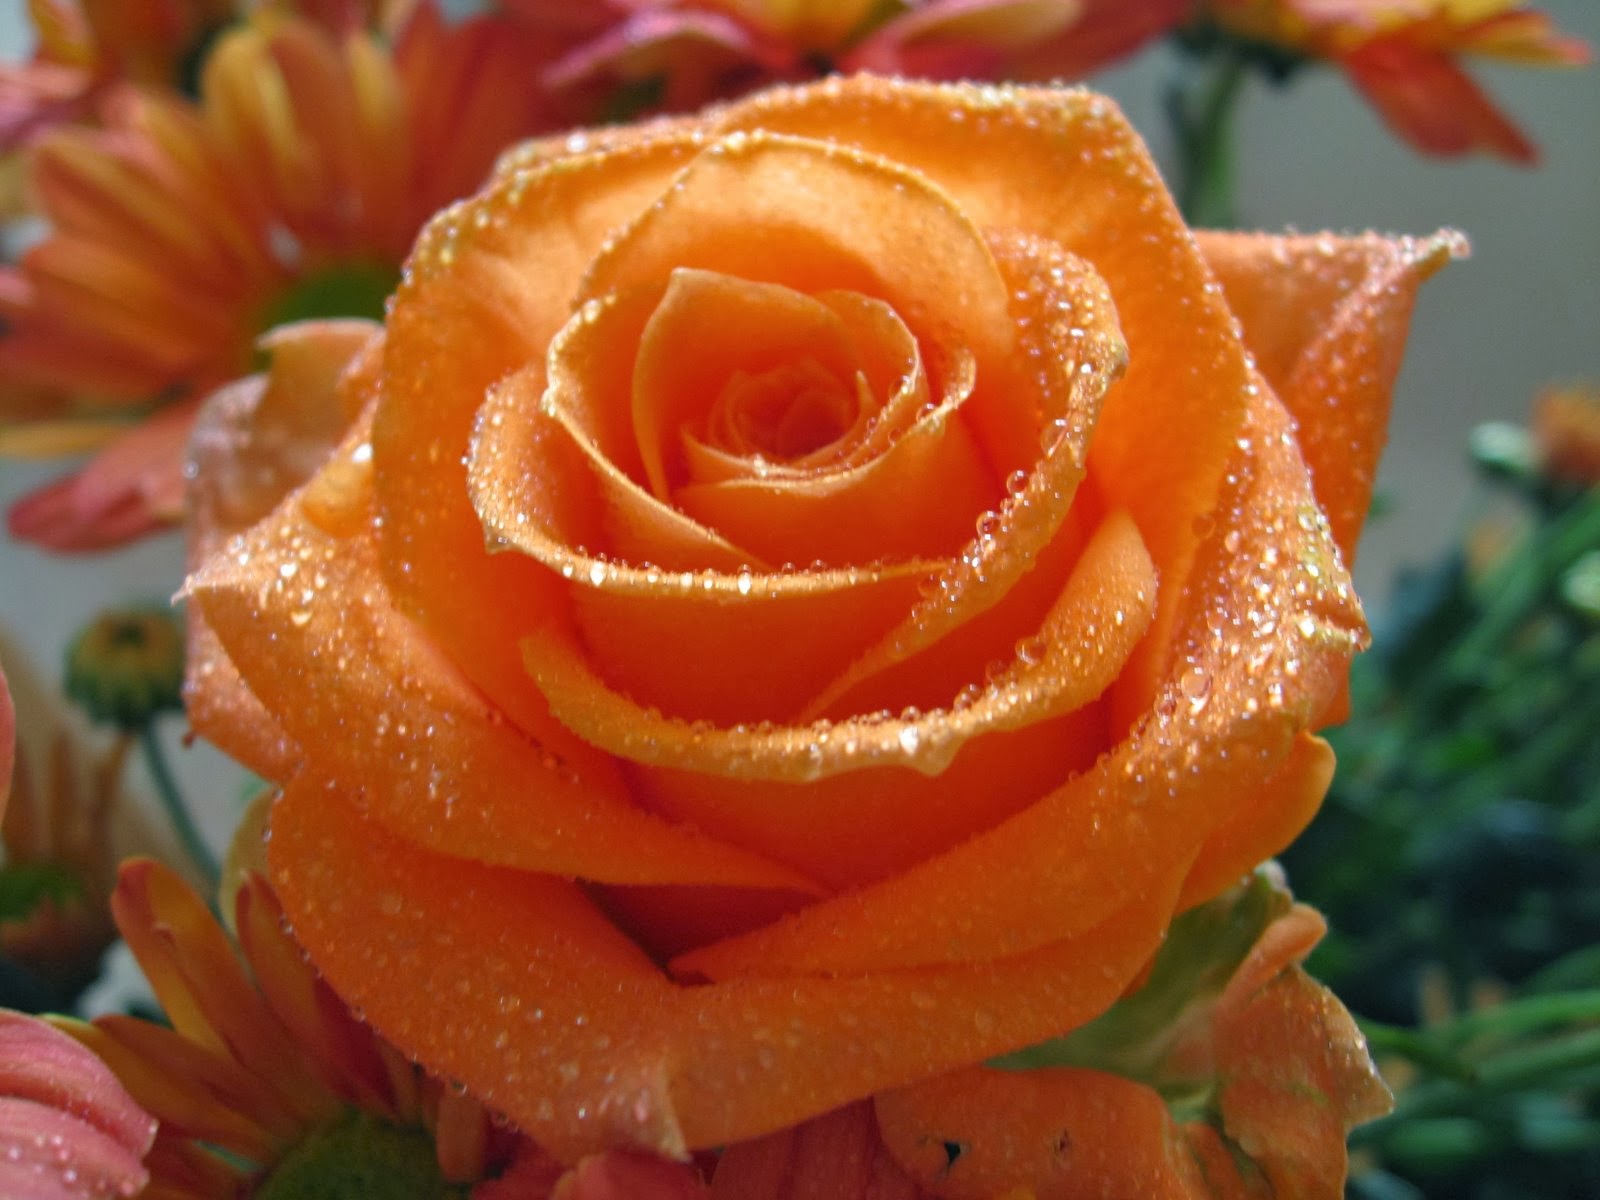 Real Orange Roses